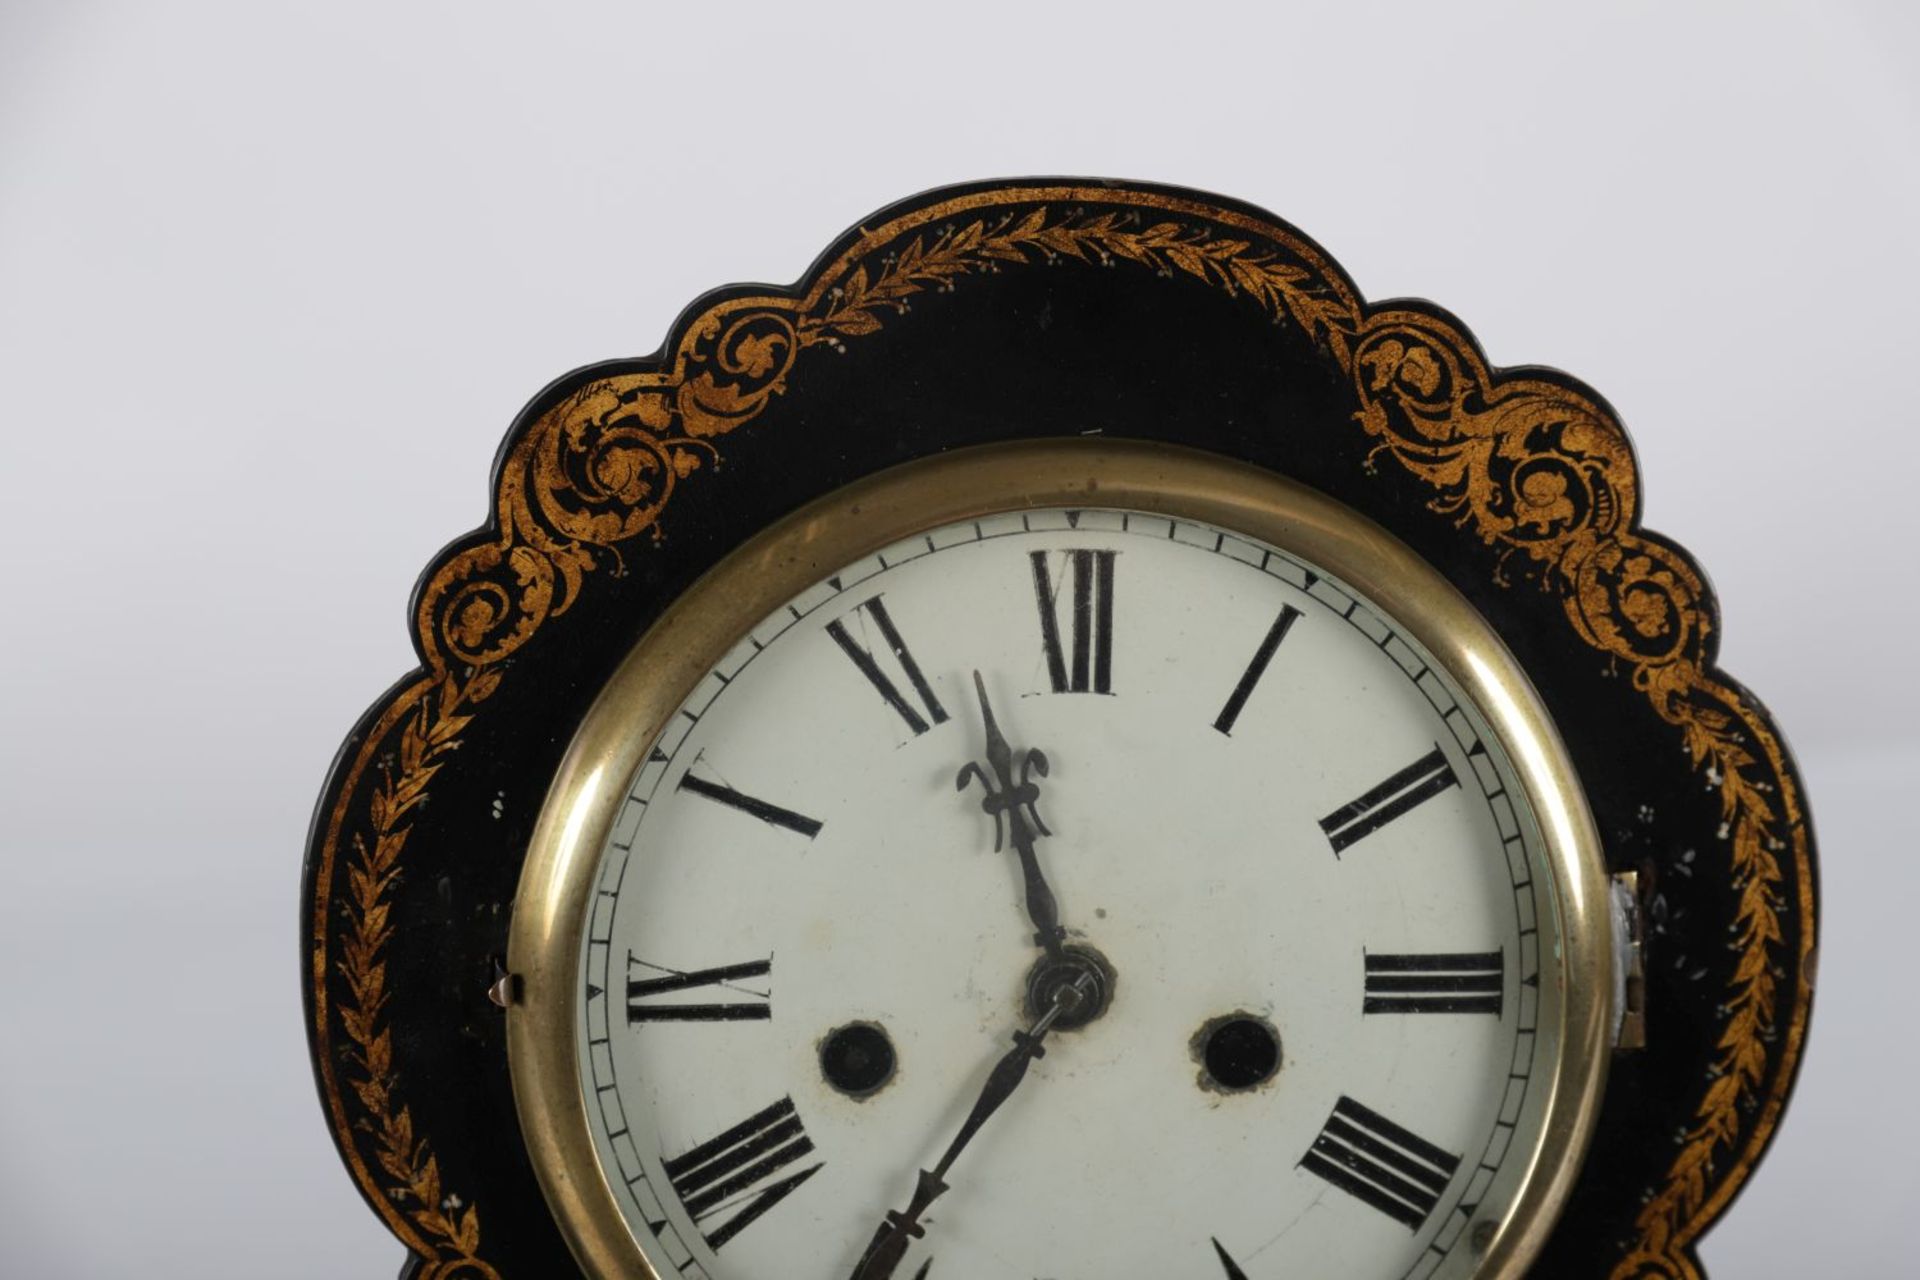 19TH-CENTURY PAPIER MACHE CASED WALL CLOCK - Image 2 of 3